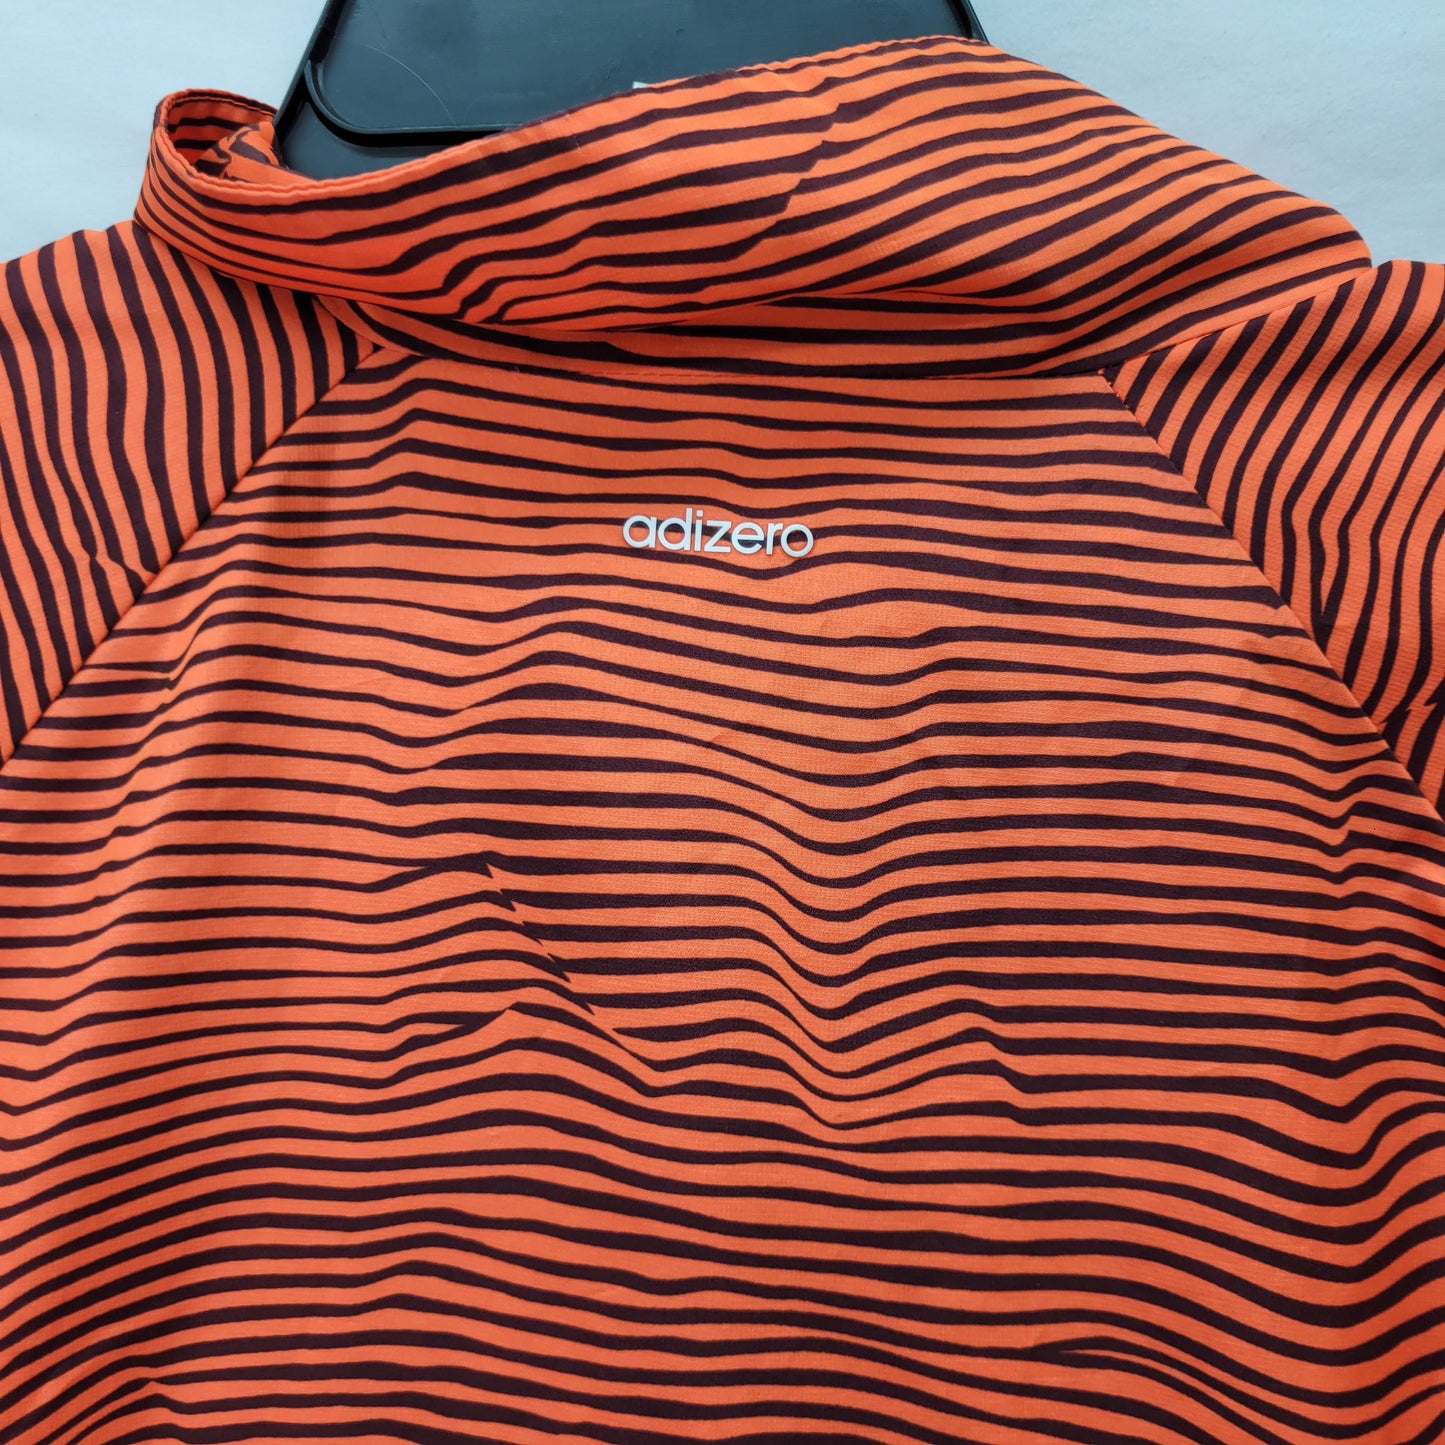 Adidas Men's Wind Breaker Striped Orange/Black - Size Large